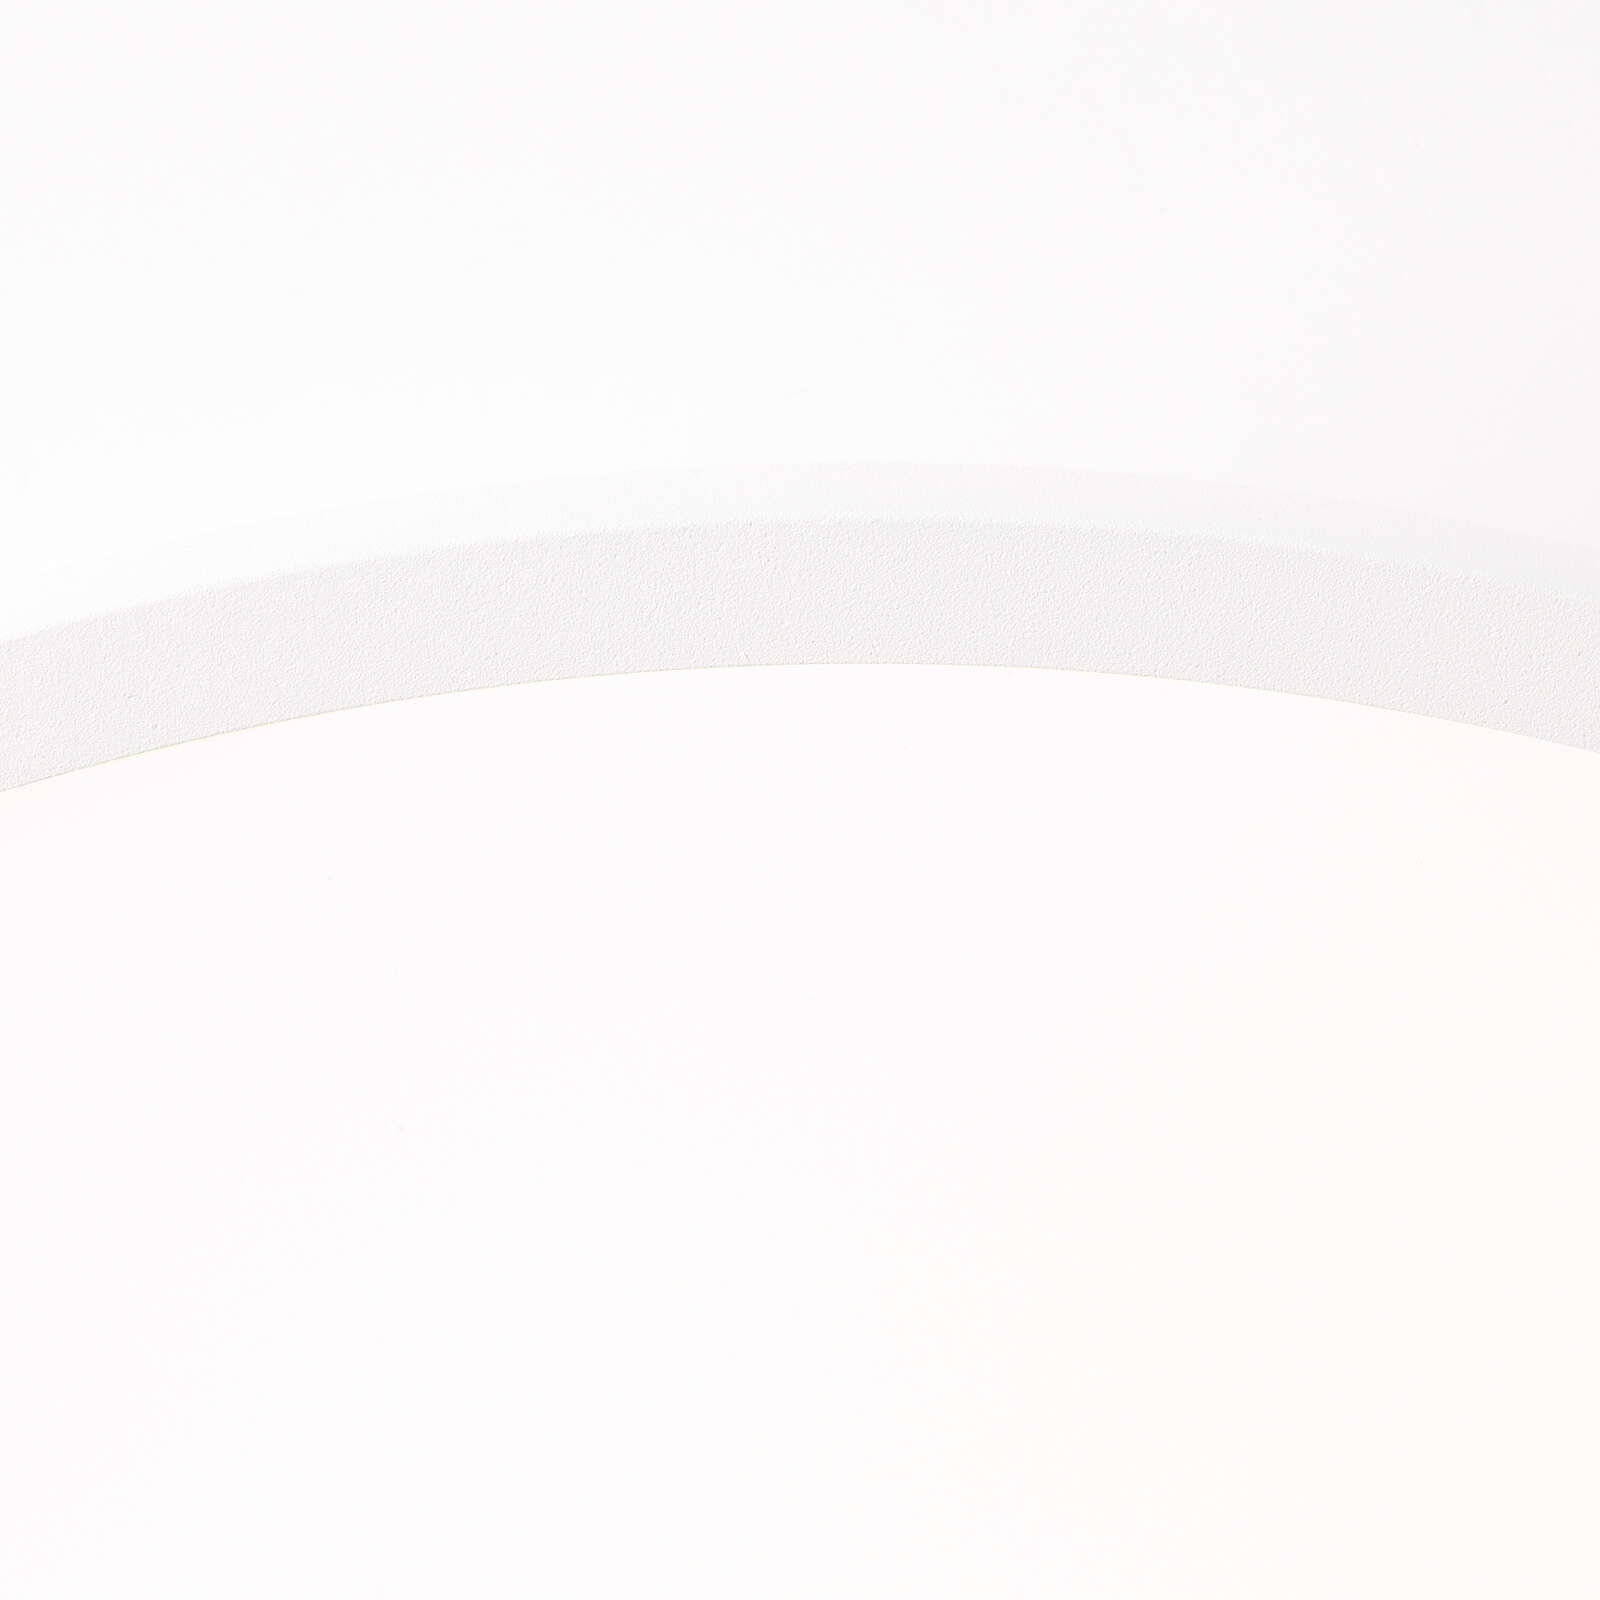             Plastic ceiling light - Constantin 7 - White
        